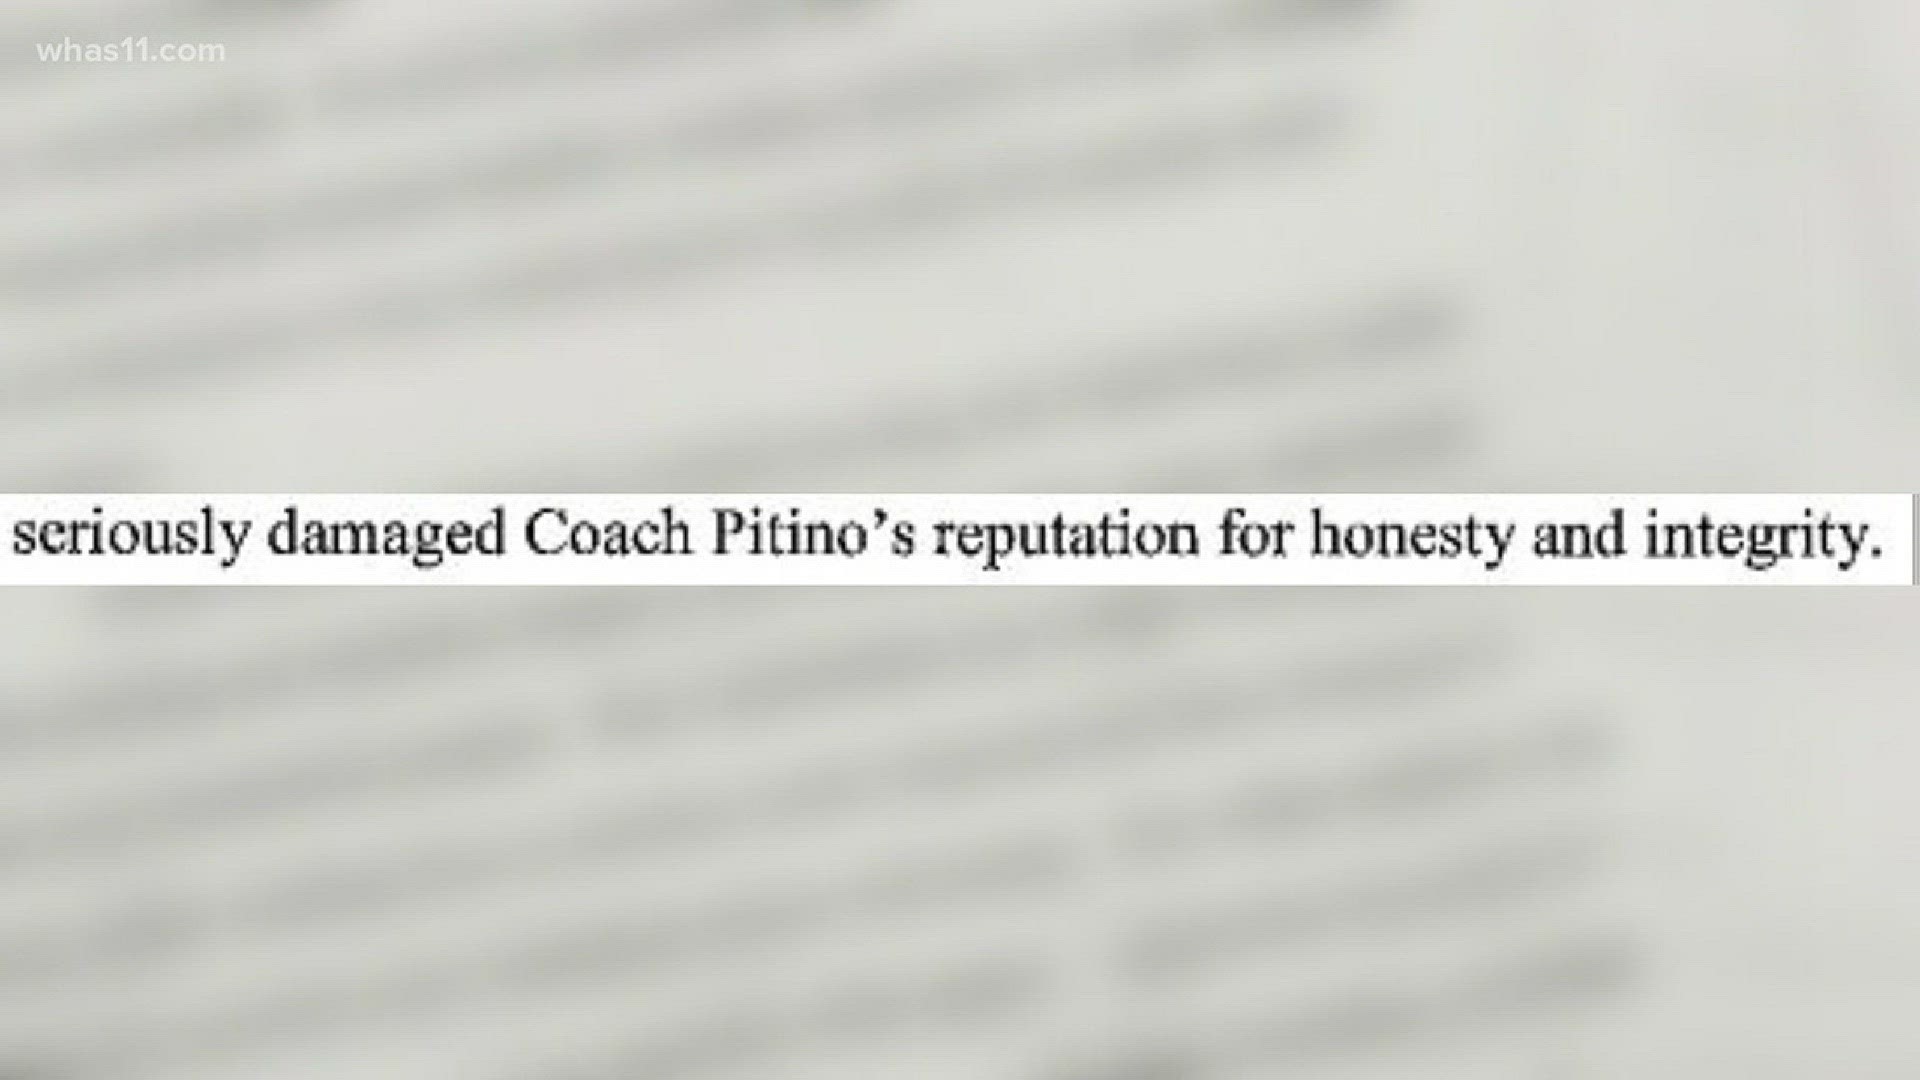 Lawsuit filed: Rick Pitino sues Adidas